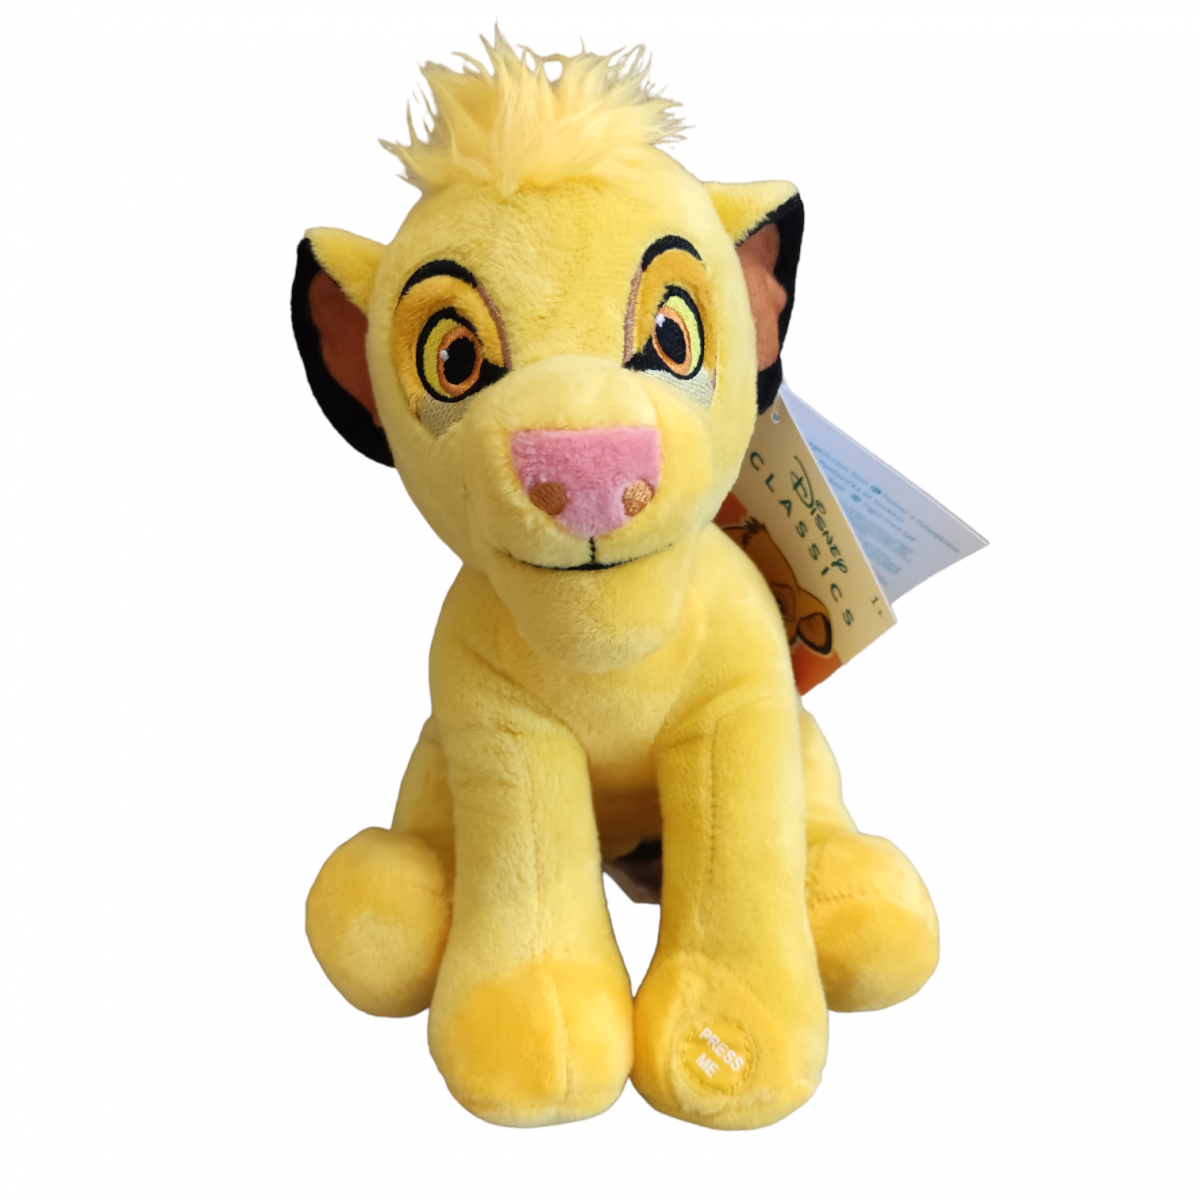 Simba peluche Il re leone The lion king 20 cm plush sound